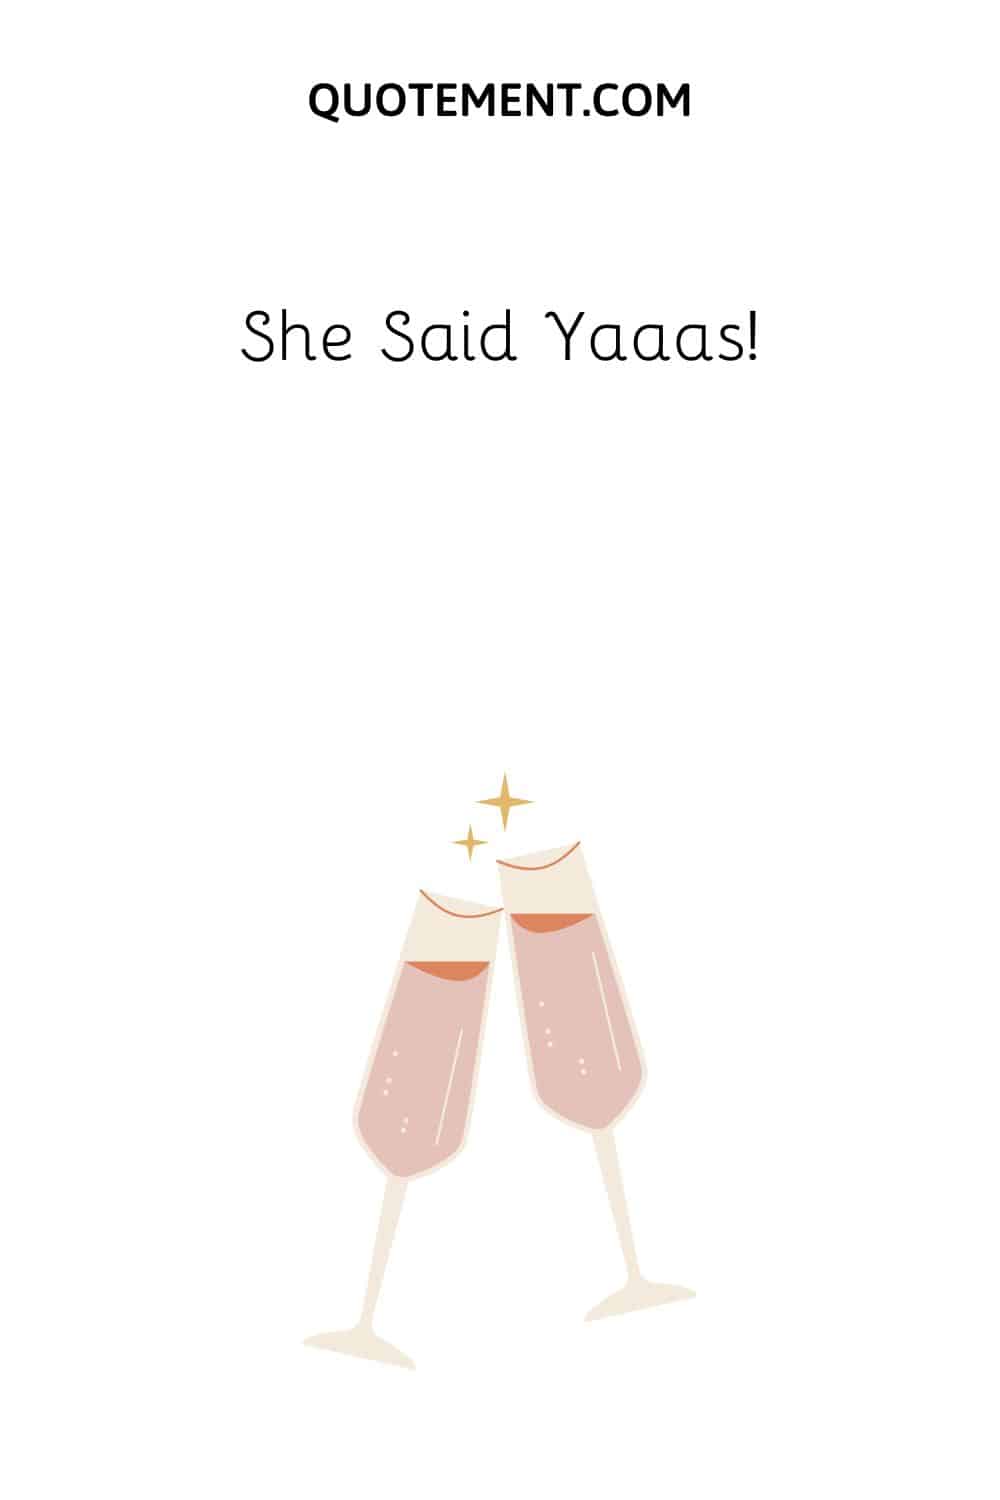 She Said Yaaas!